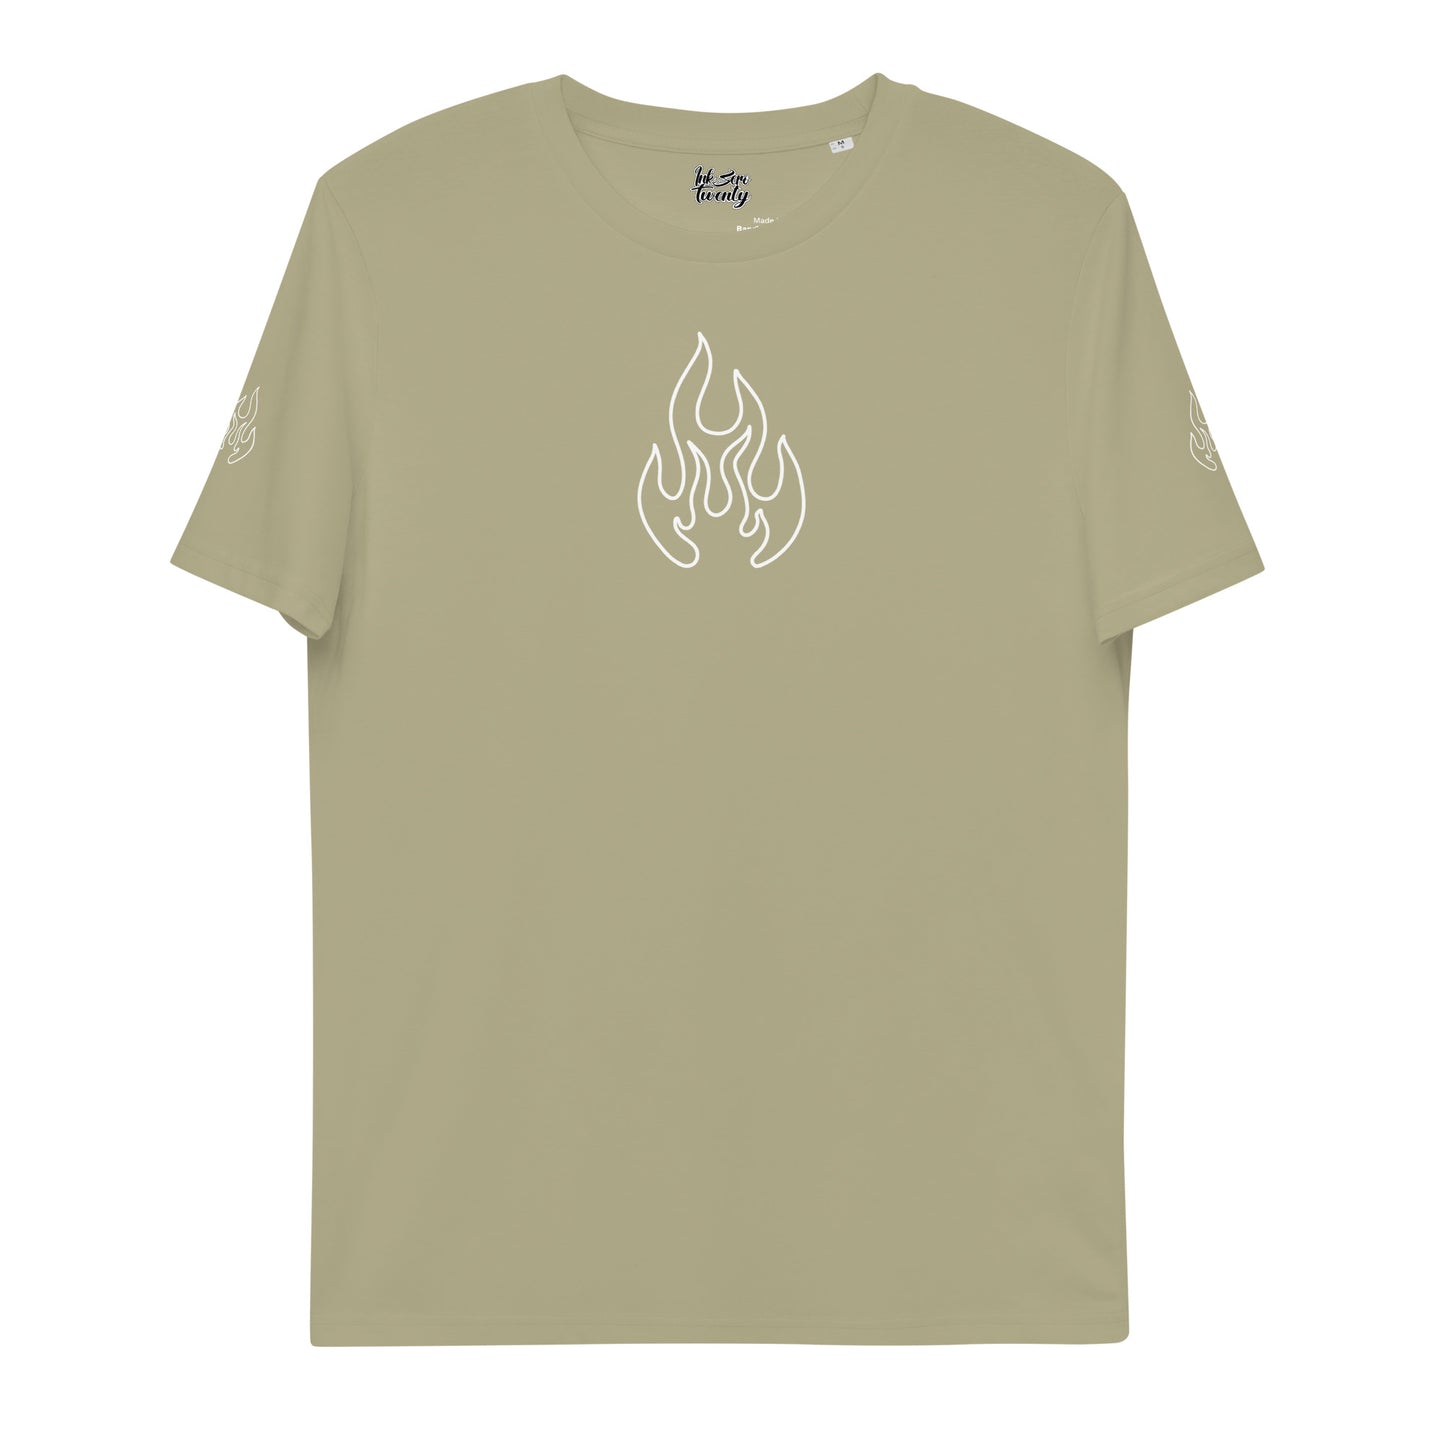 Unisex organic cotton t-shirt white flame tattoo print